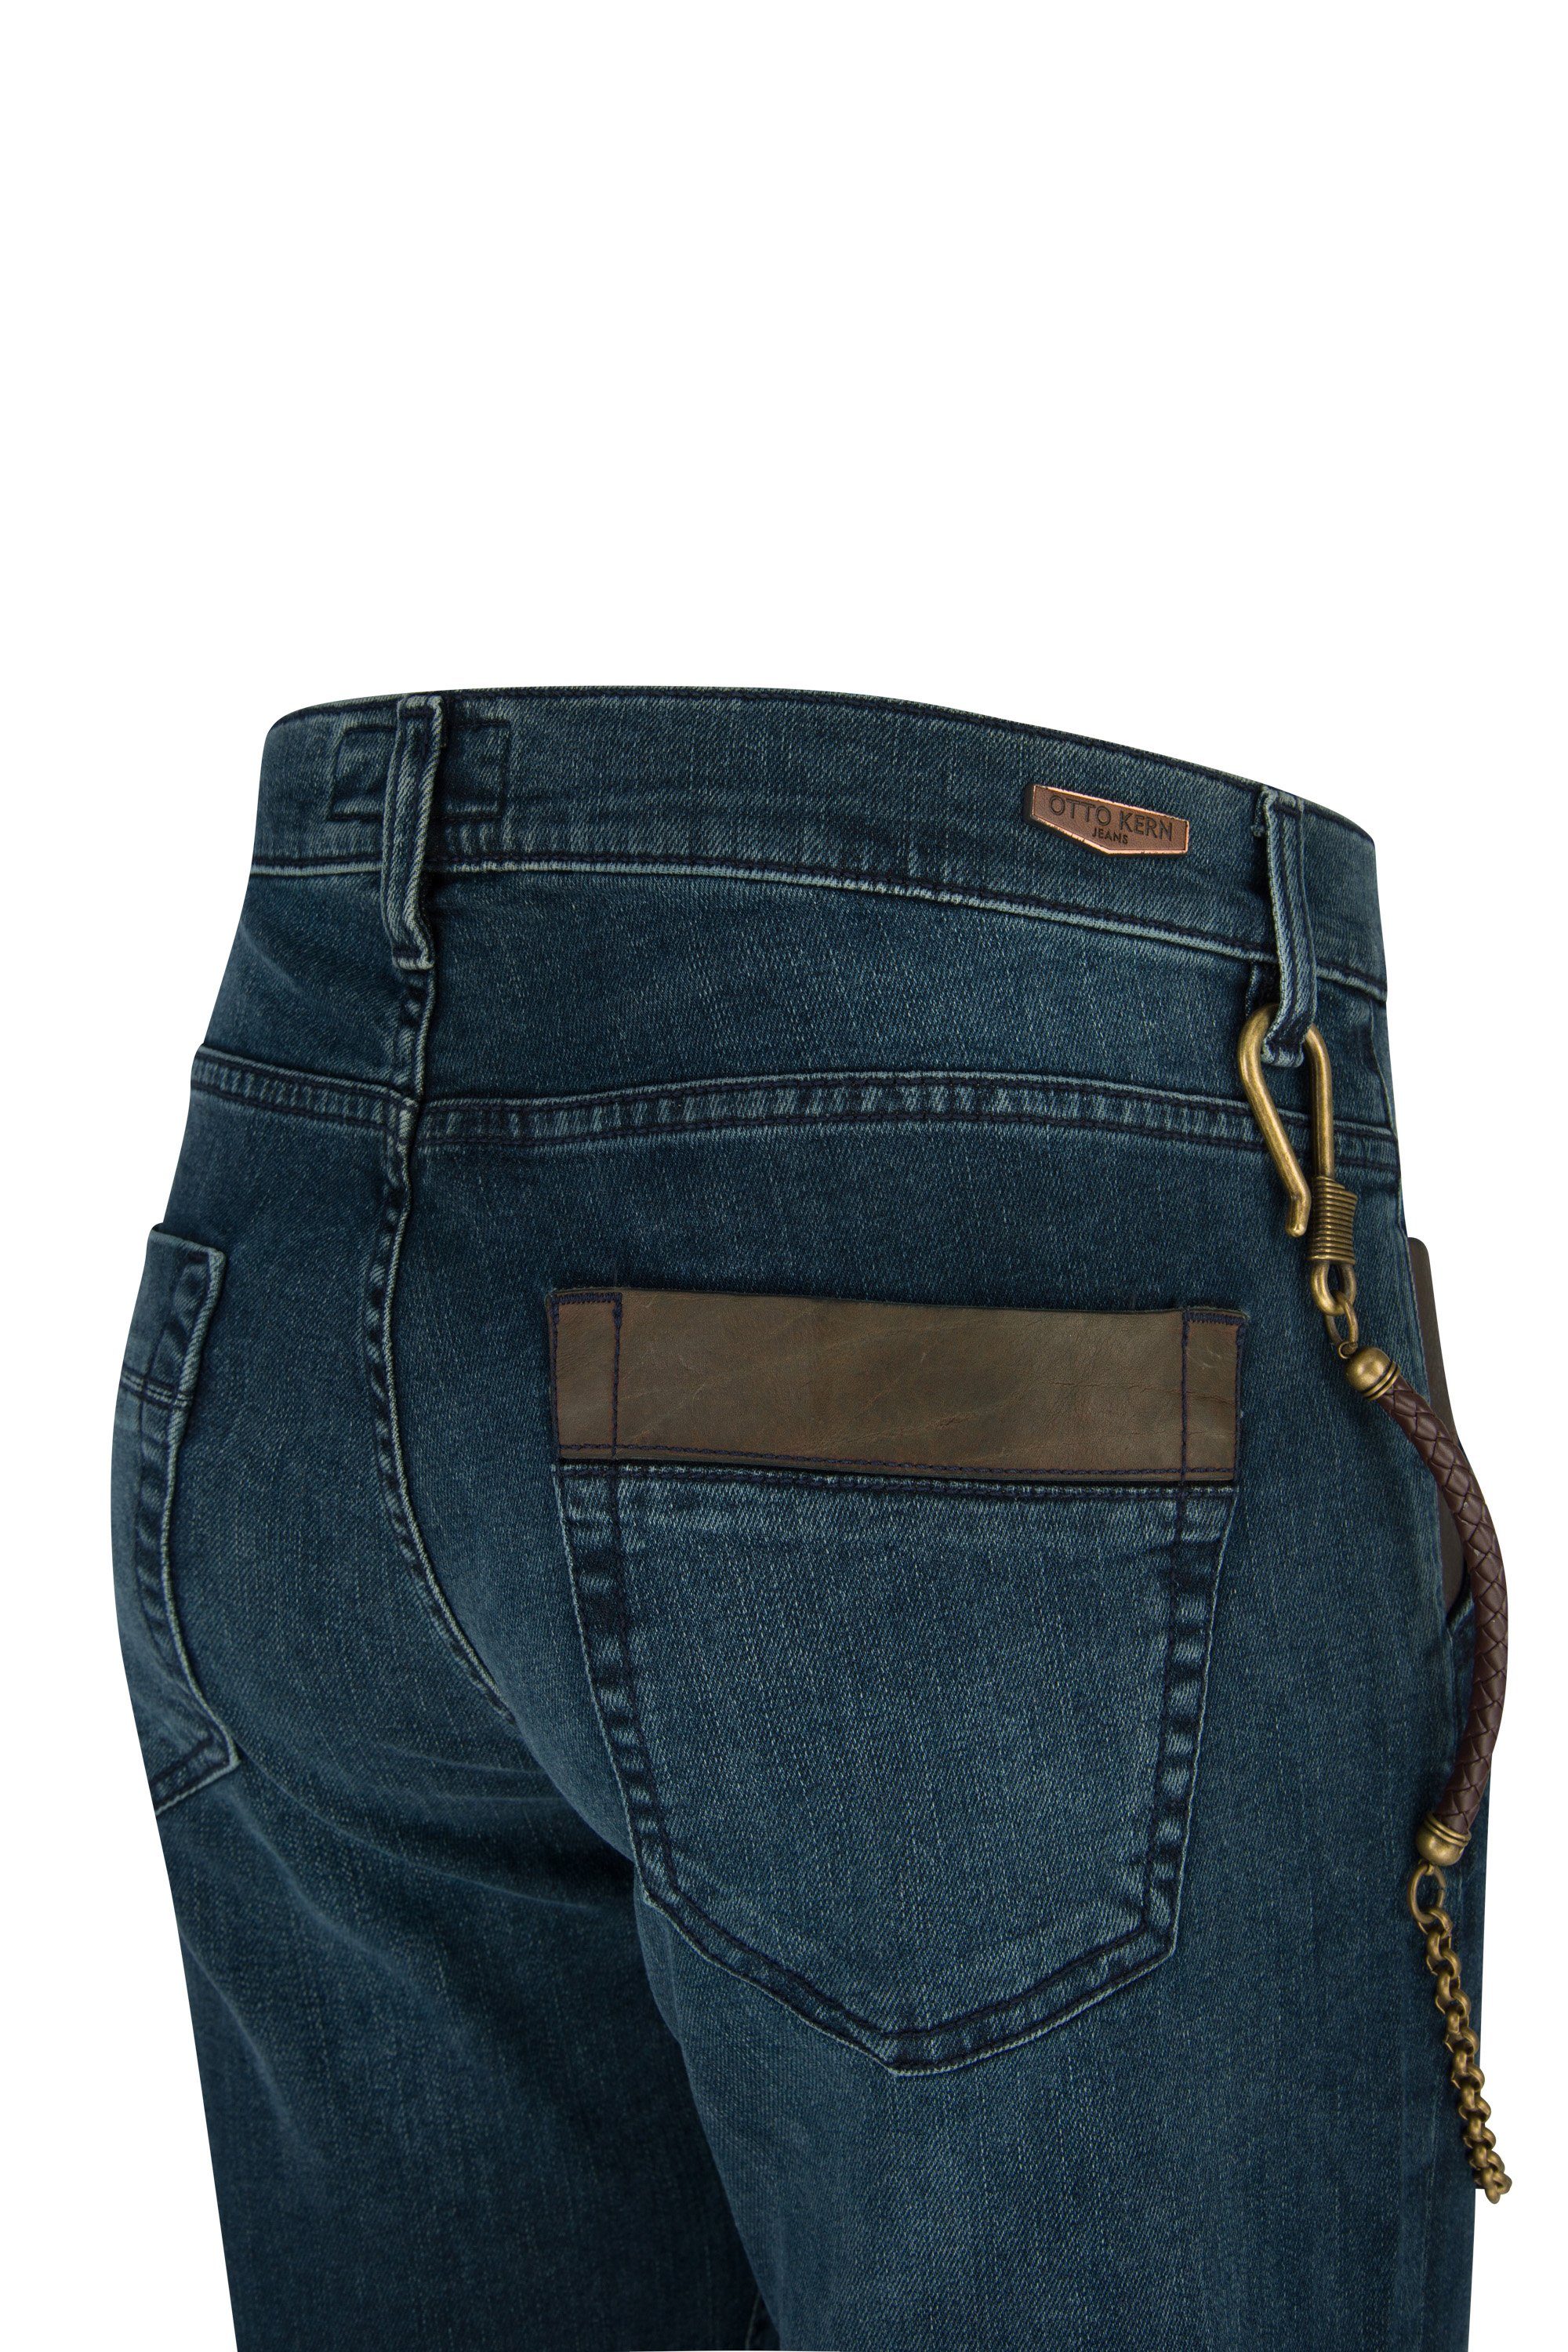 Kern 5-Pocket-Jeans OTTO KERN blue 67373 STAN 6208.6834 used buffies